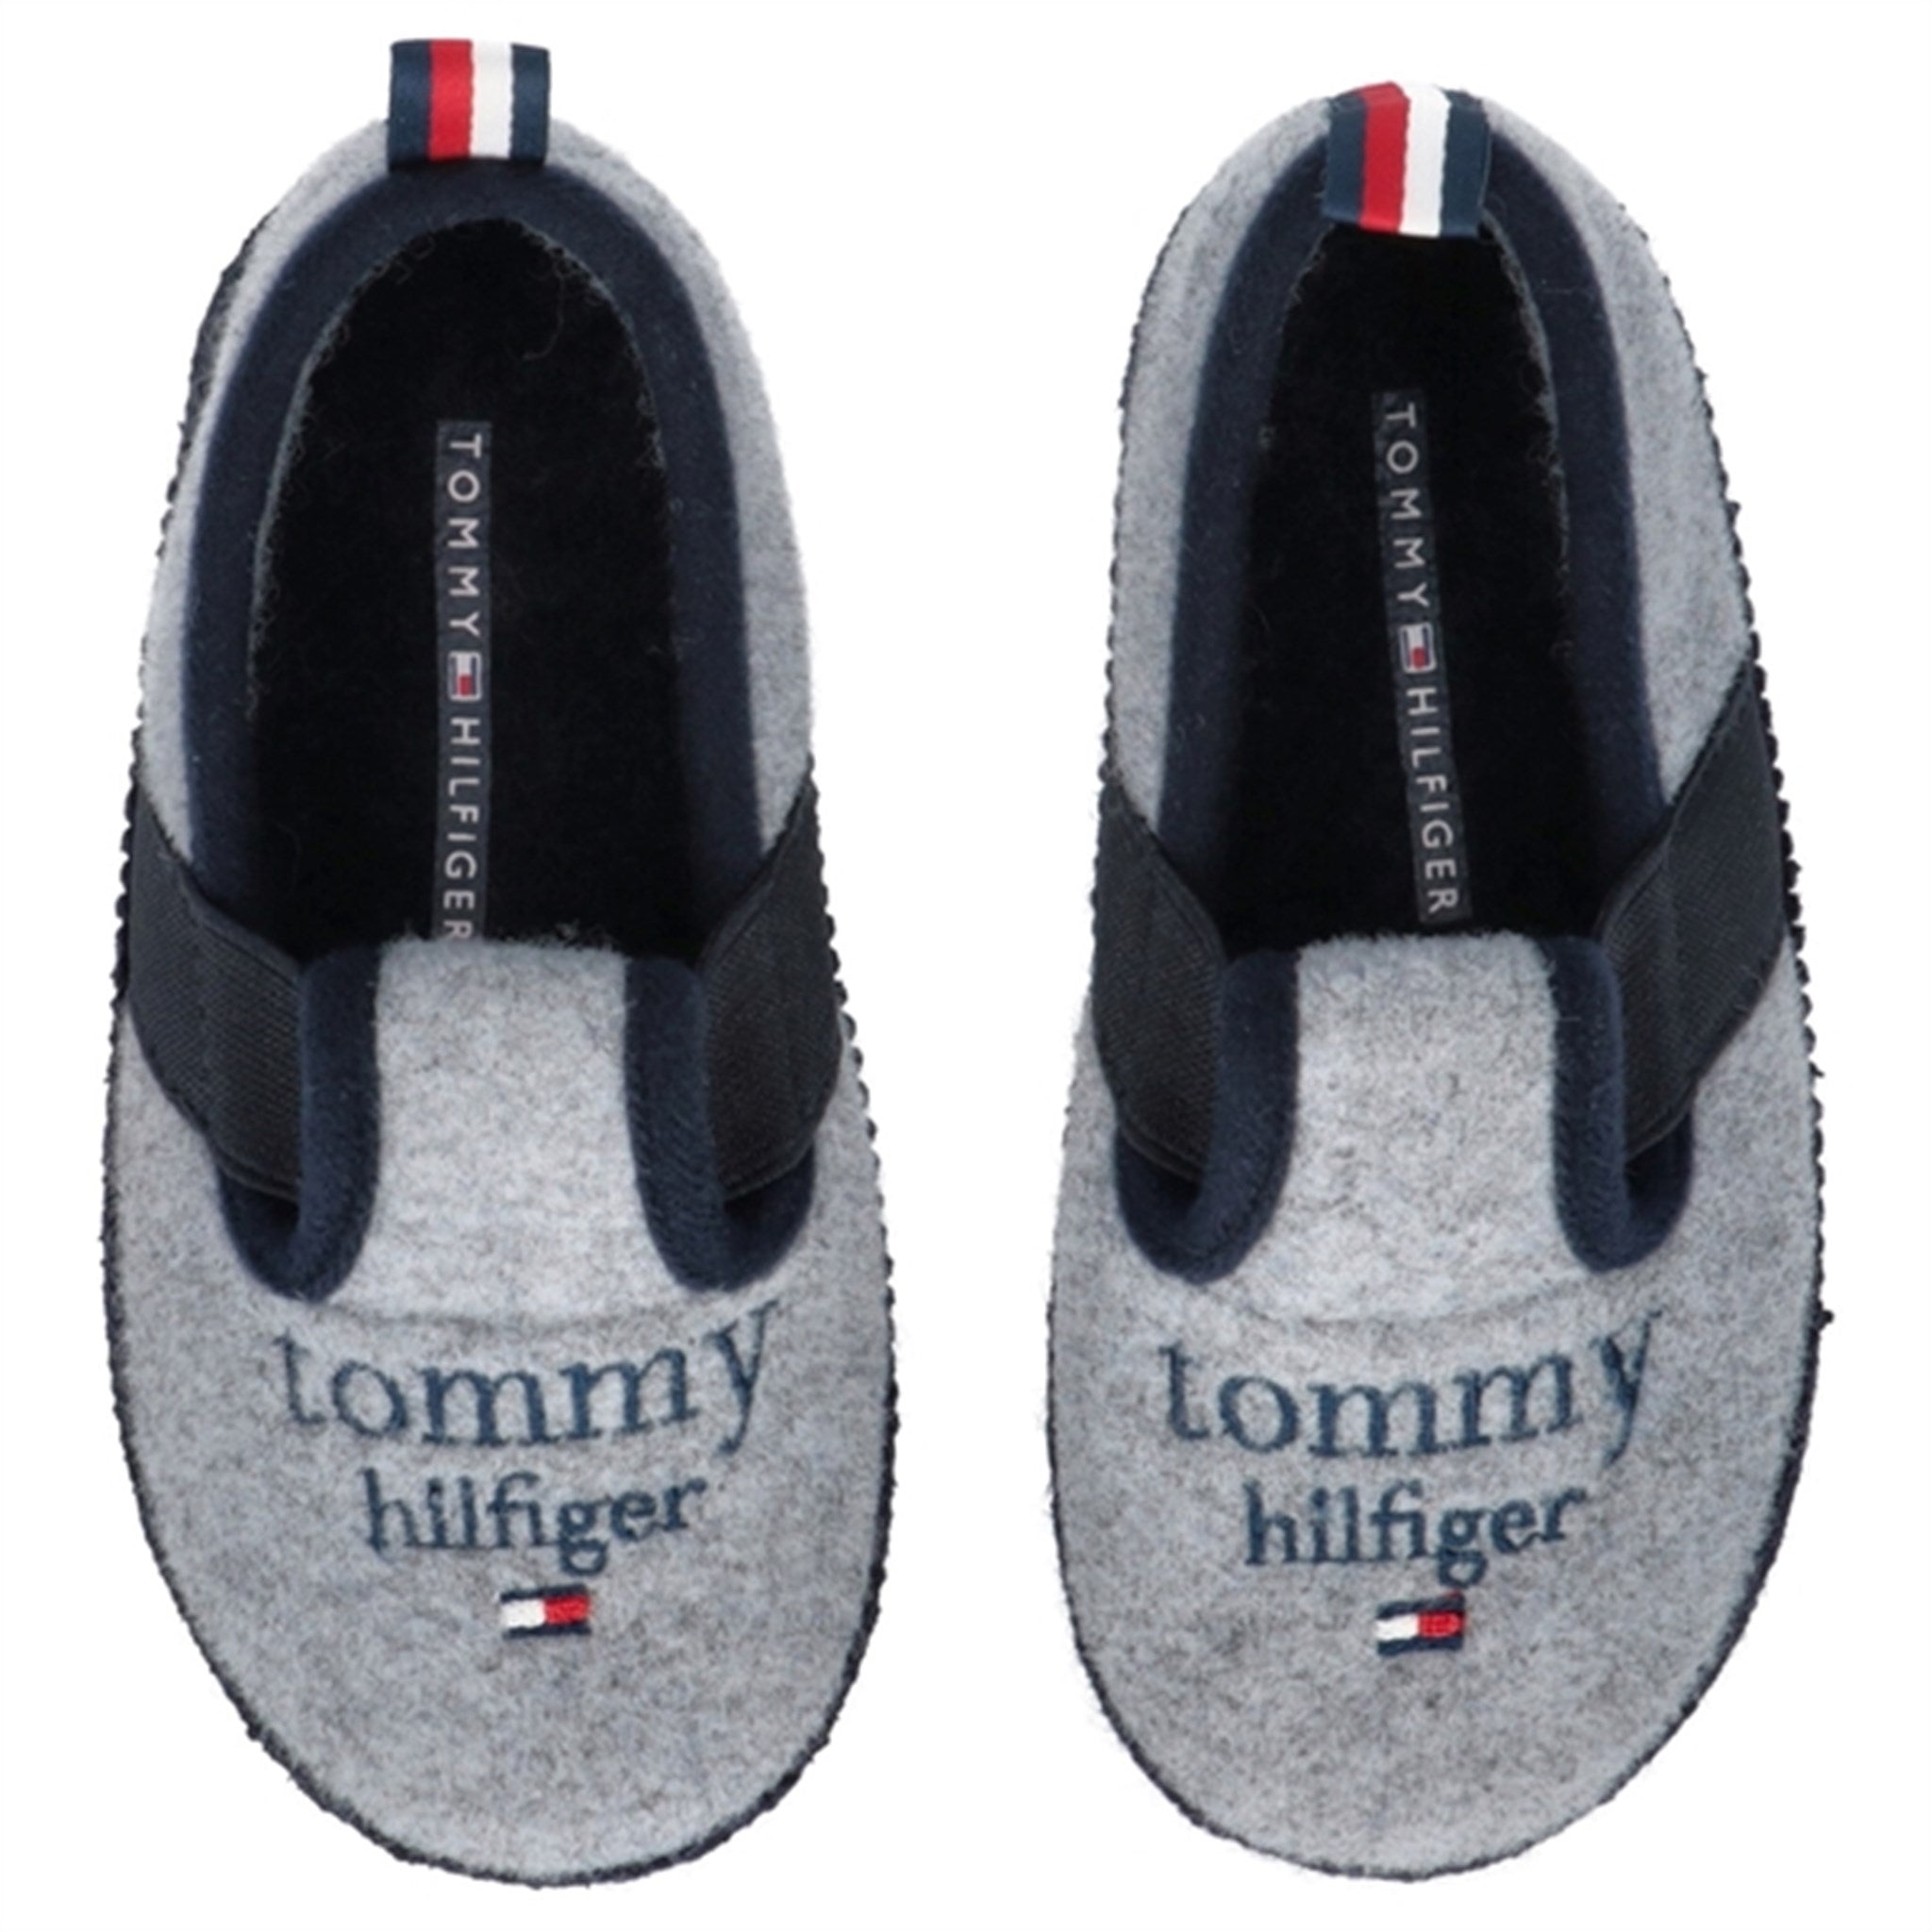 Tommy Hilfiger Indoor Slipper Grey 2